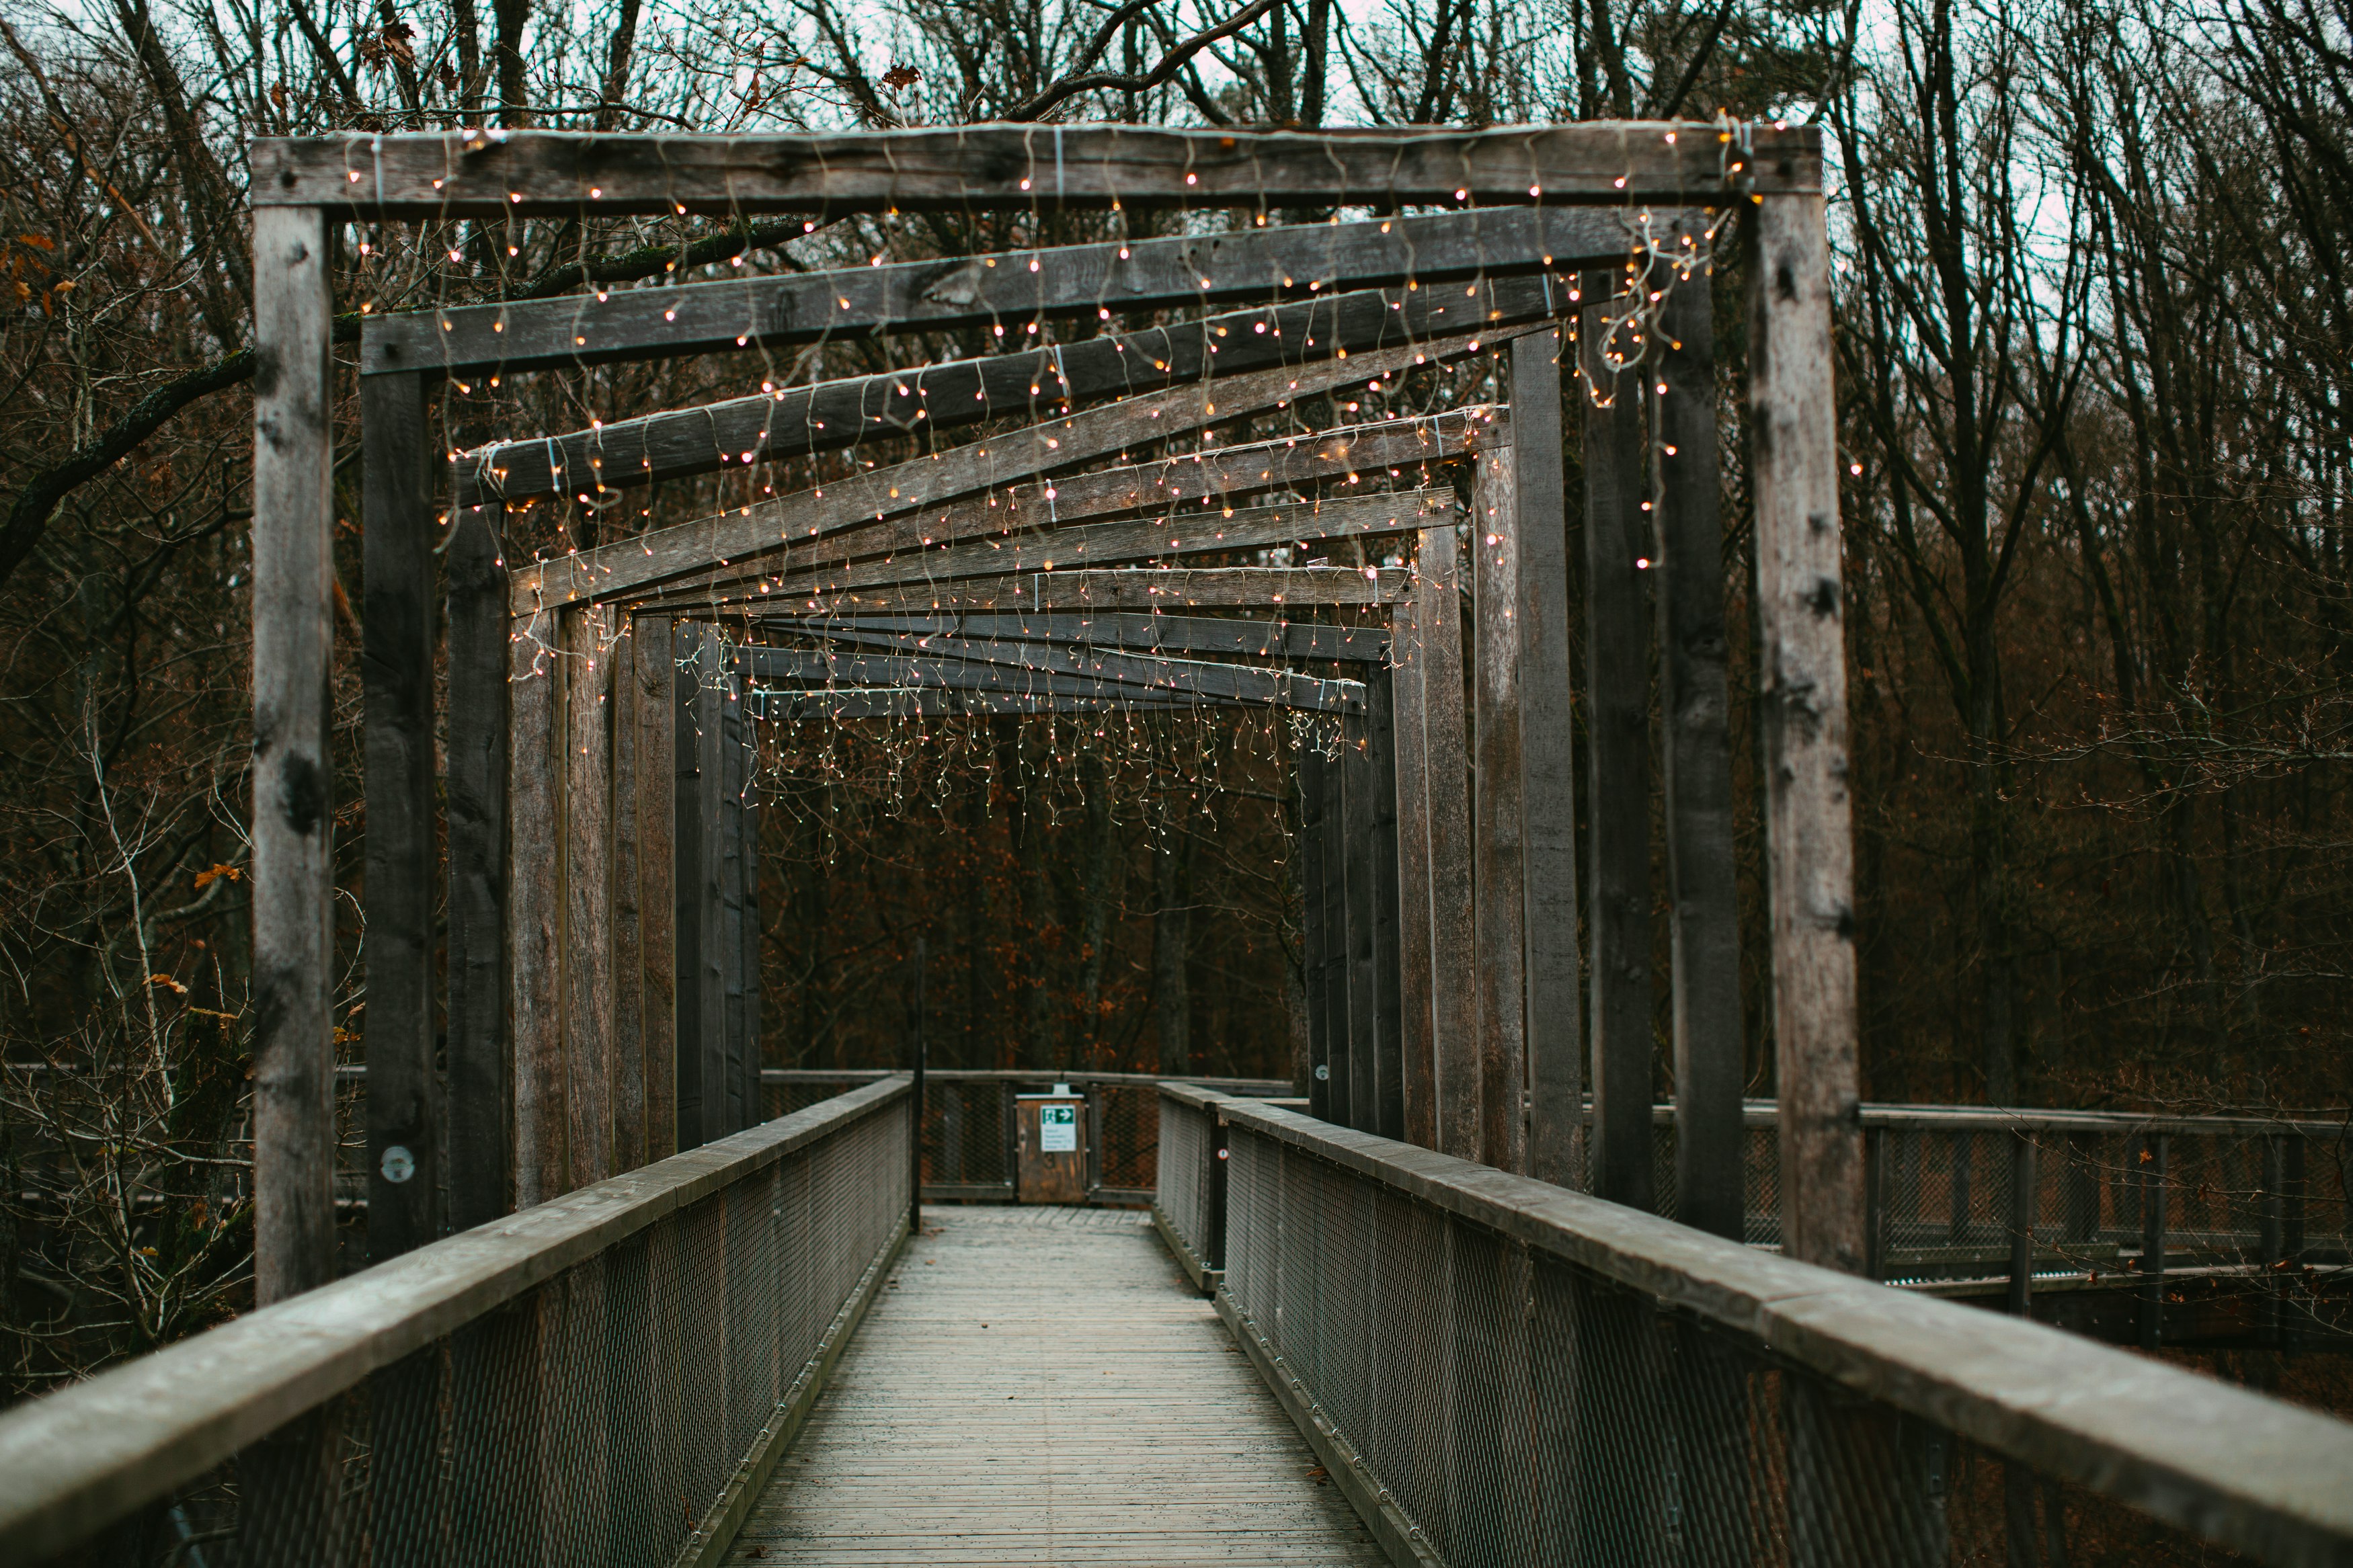 brown wooden bridge in between bare trees during daytime